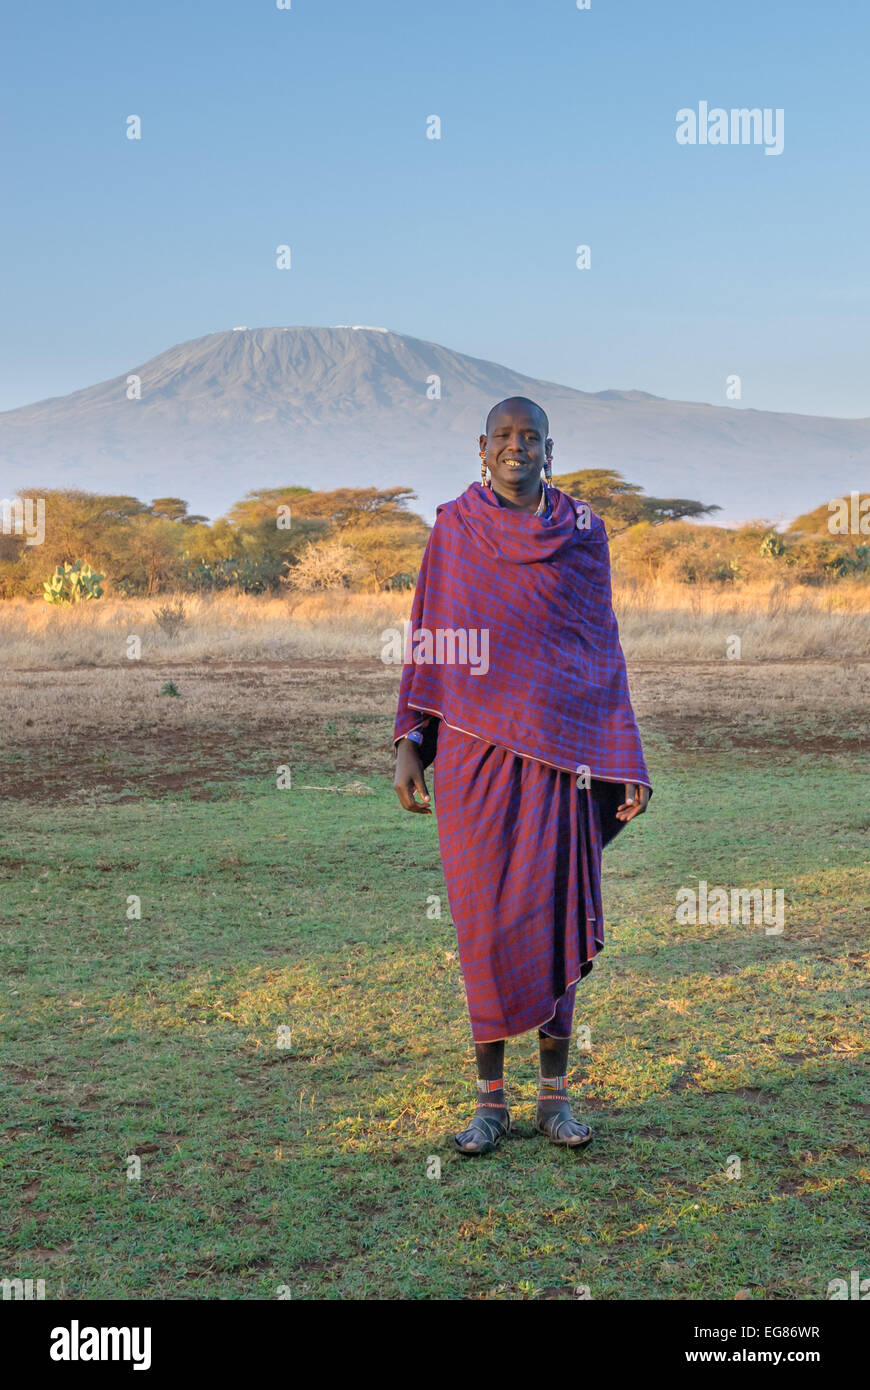 AMBOSELI, Kenia - 20. September: Junge Masai Mensch und Kilimanjaro Berg im Hintergrund am 20. September 2008 in Amboseli Nationa Stockfoto